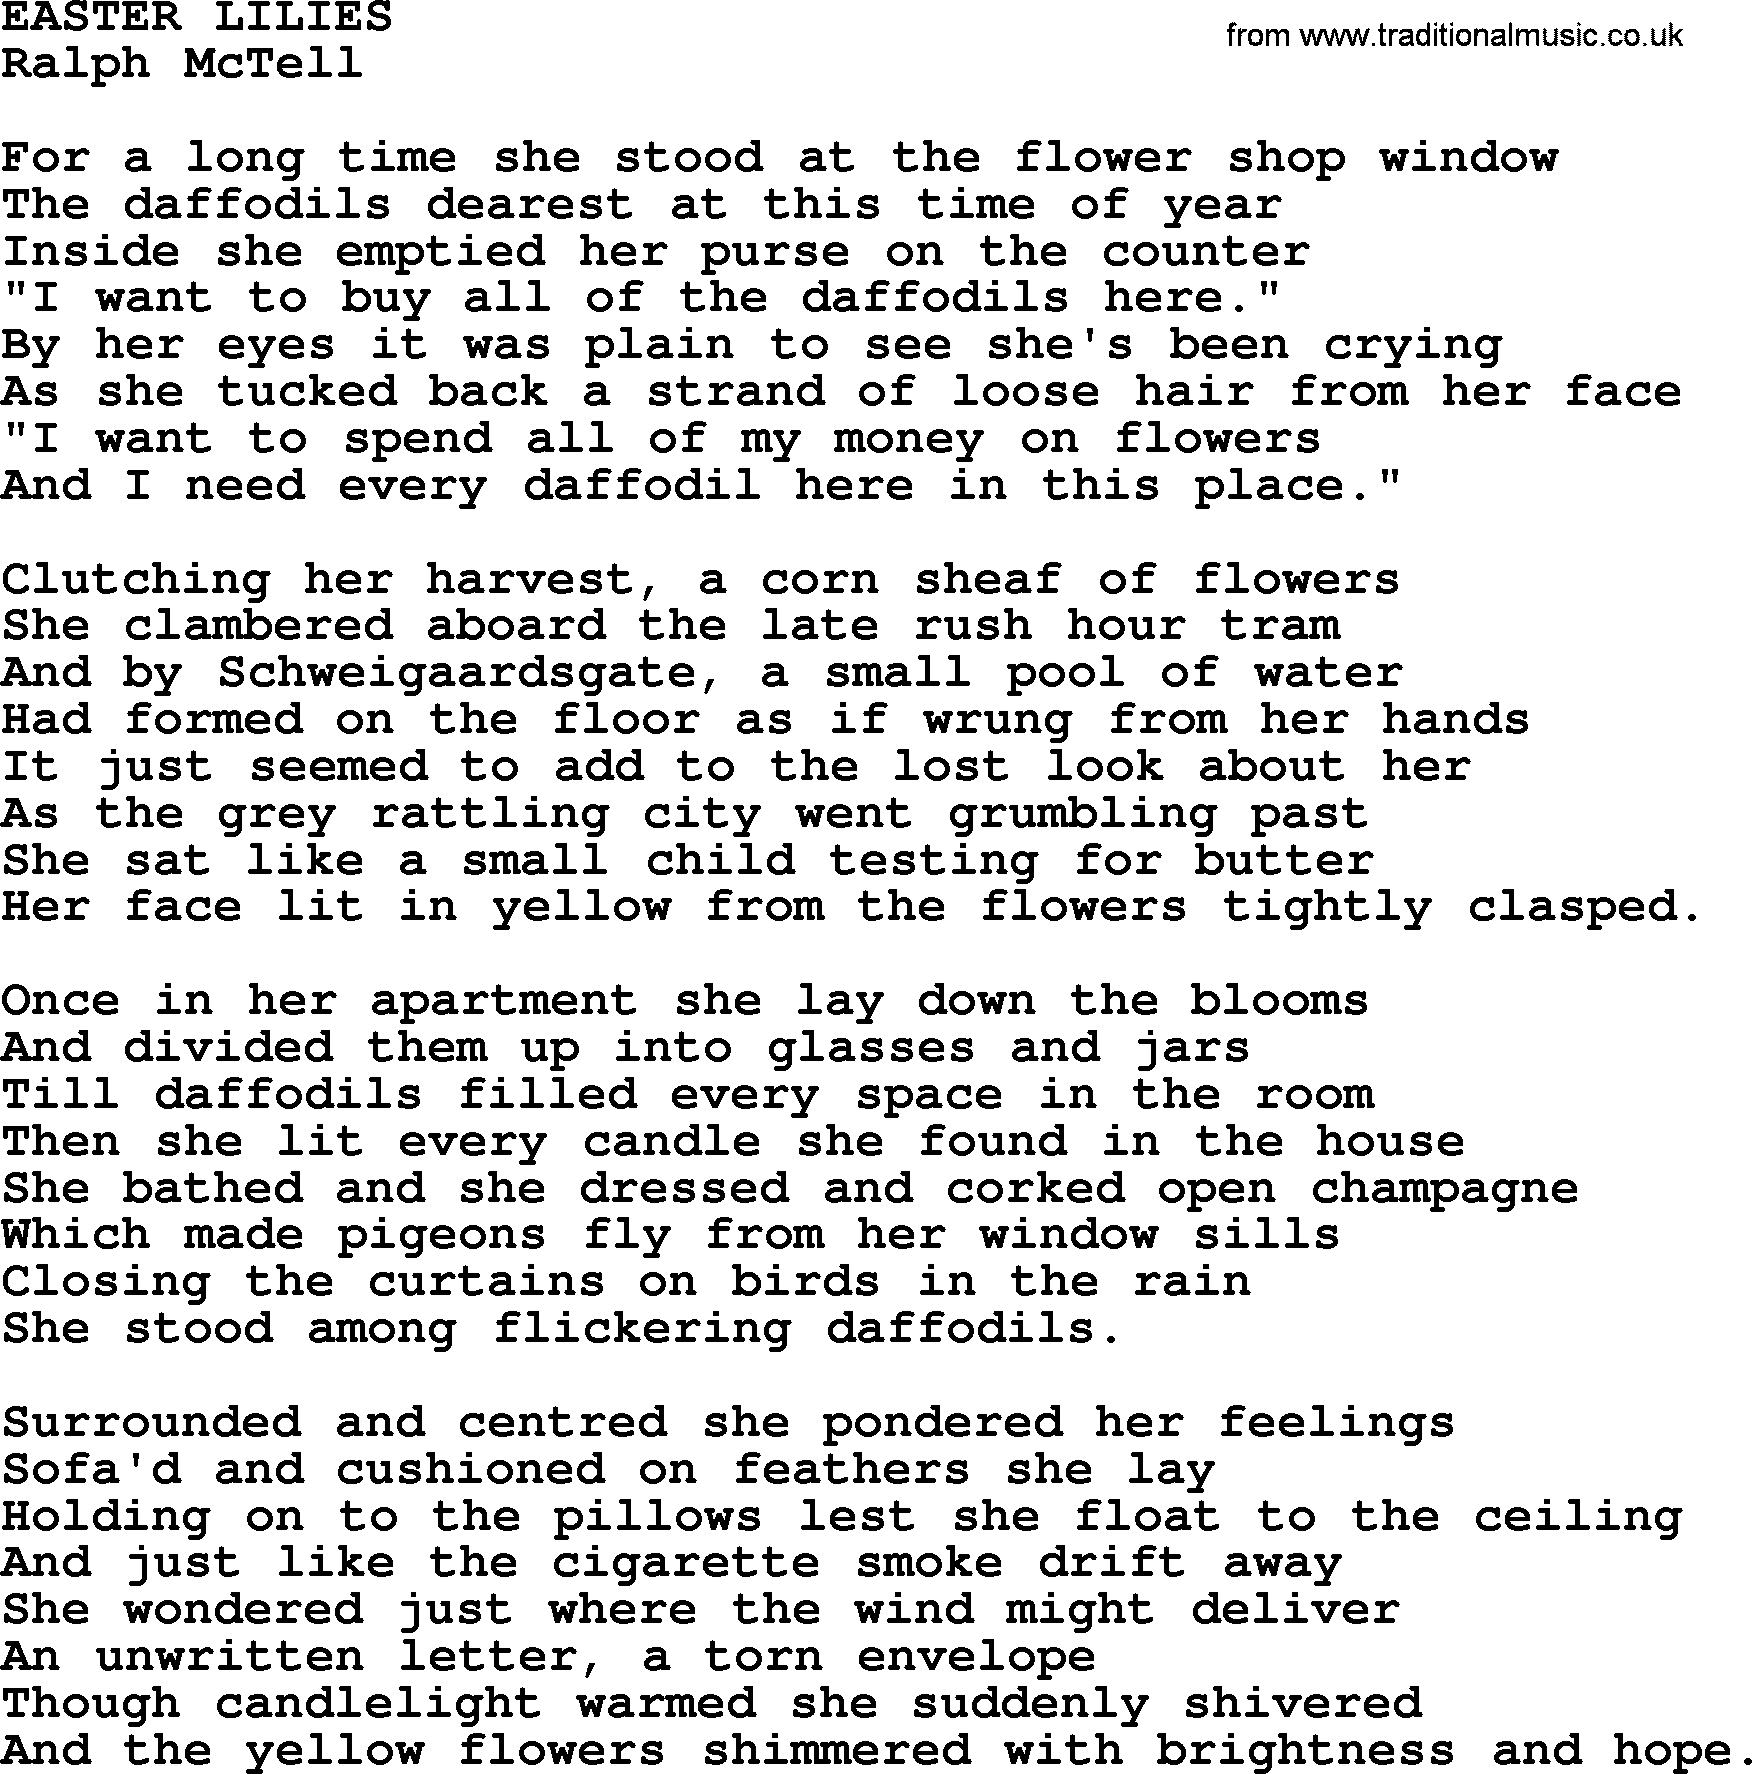 Ralph McTell Song: Easter Lilies, lyrics